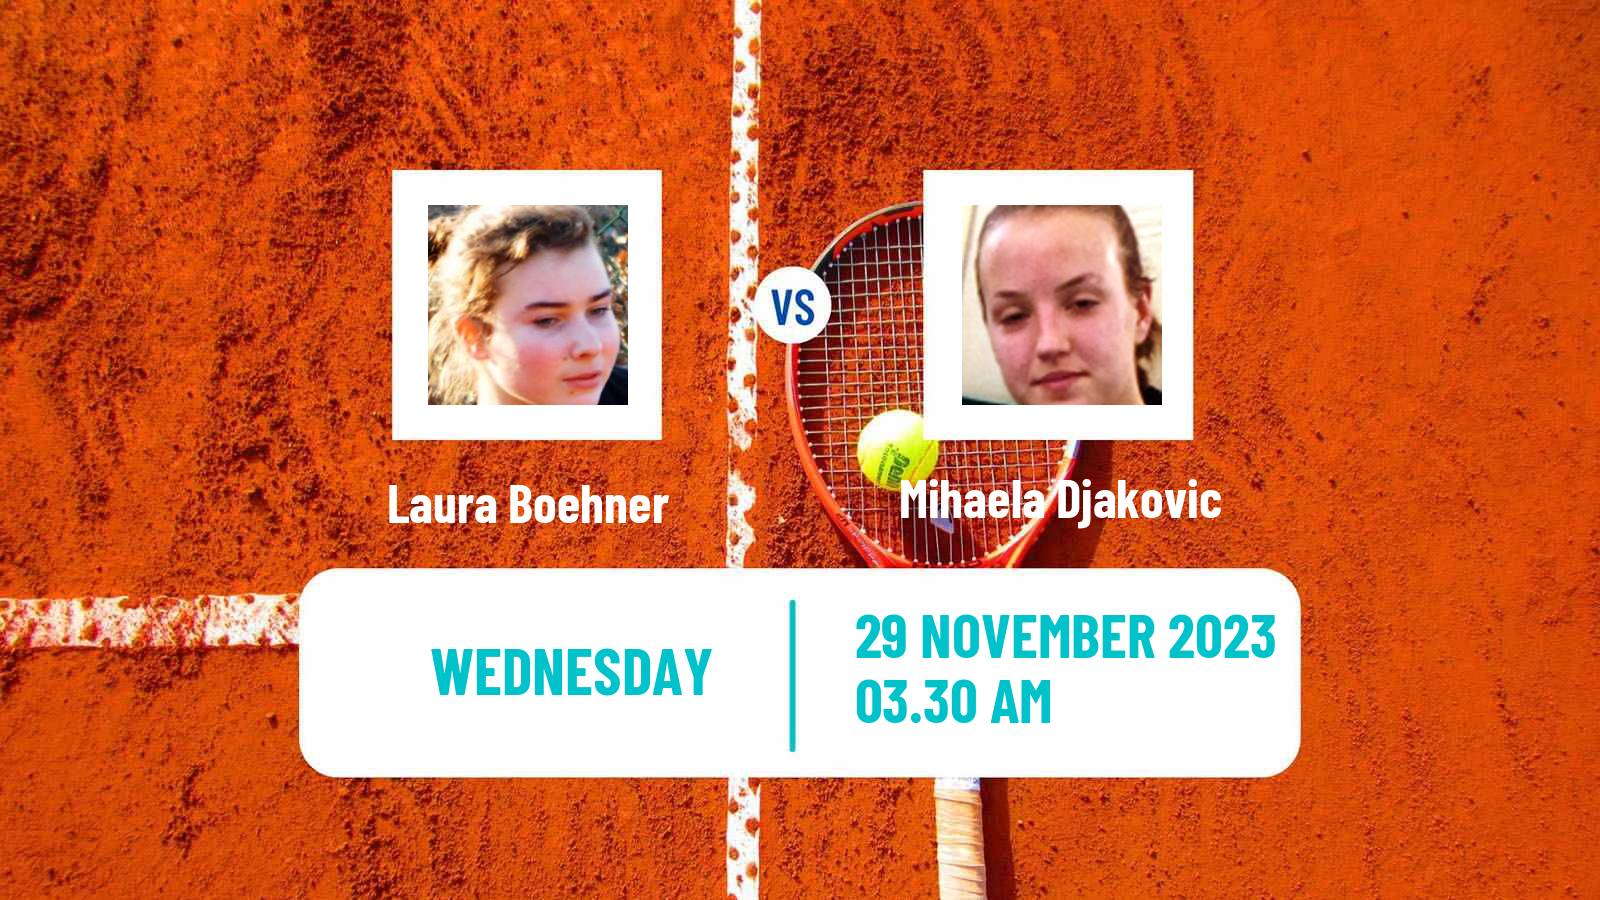 Tennis ITF W15 Valencia Women Laura Boehner - Mihaela Djakovic